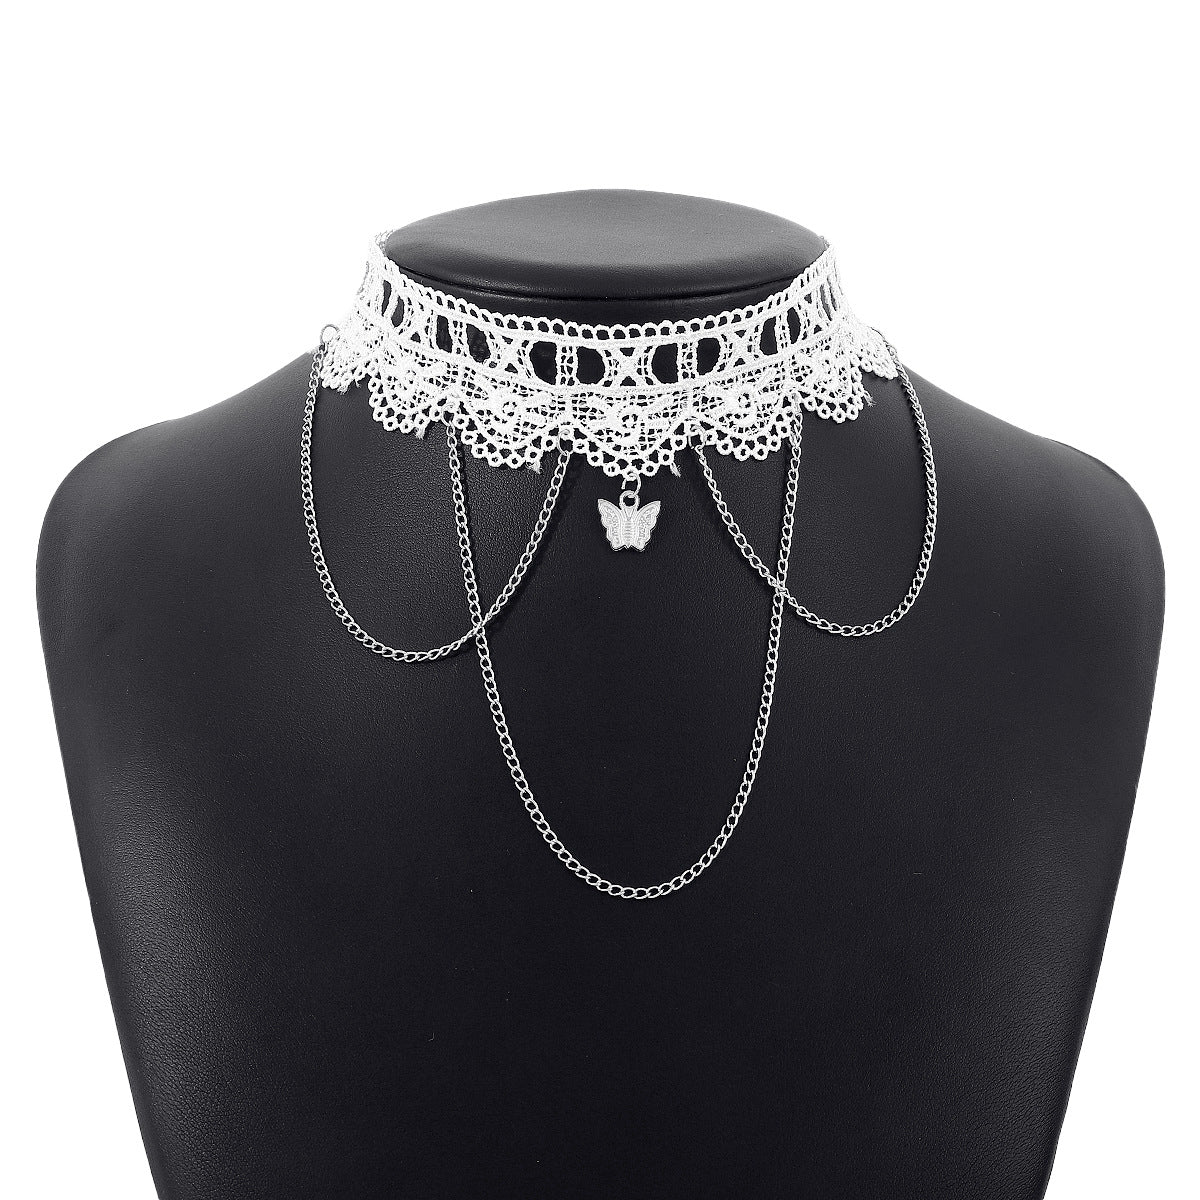 Arzonai  Cross-border fashion trendy collarbone chain choker lace sexy chain tassel necklace niche necklace